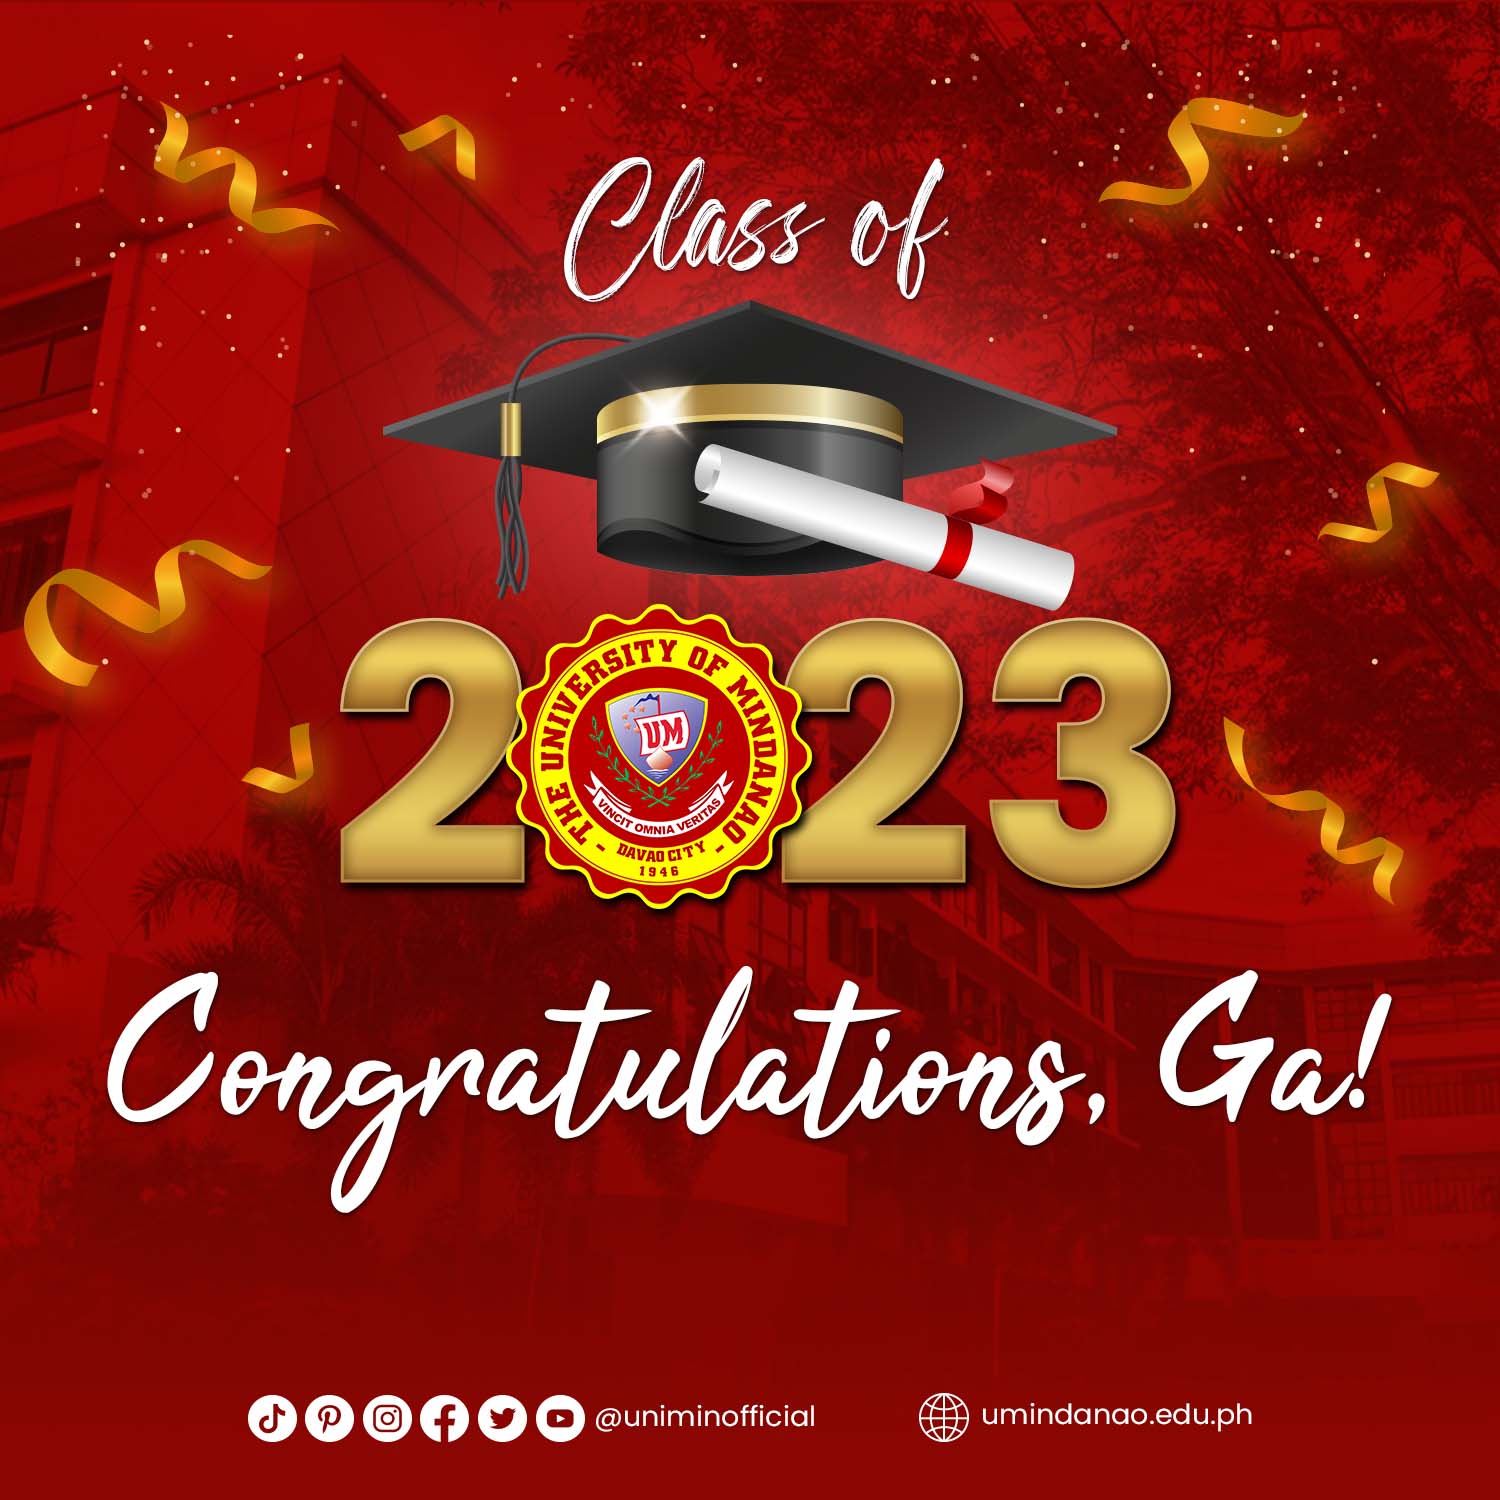 Congratulations to the Graduates!